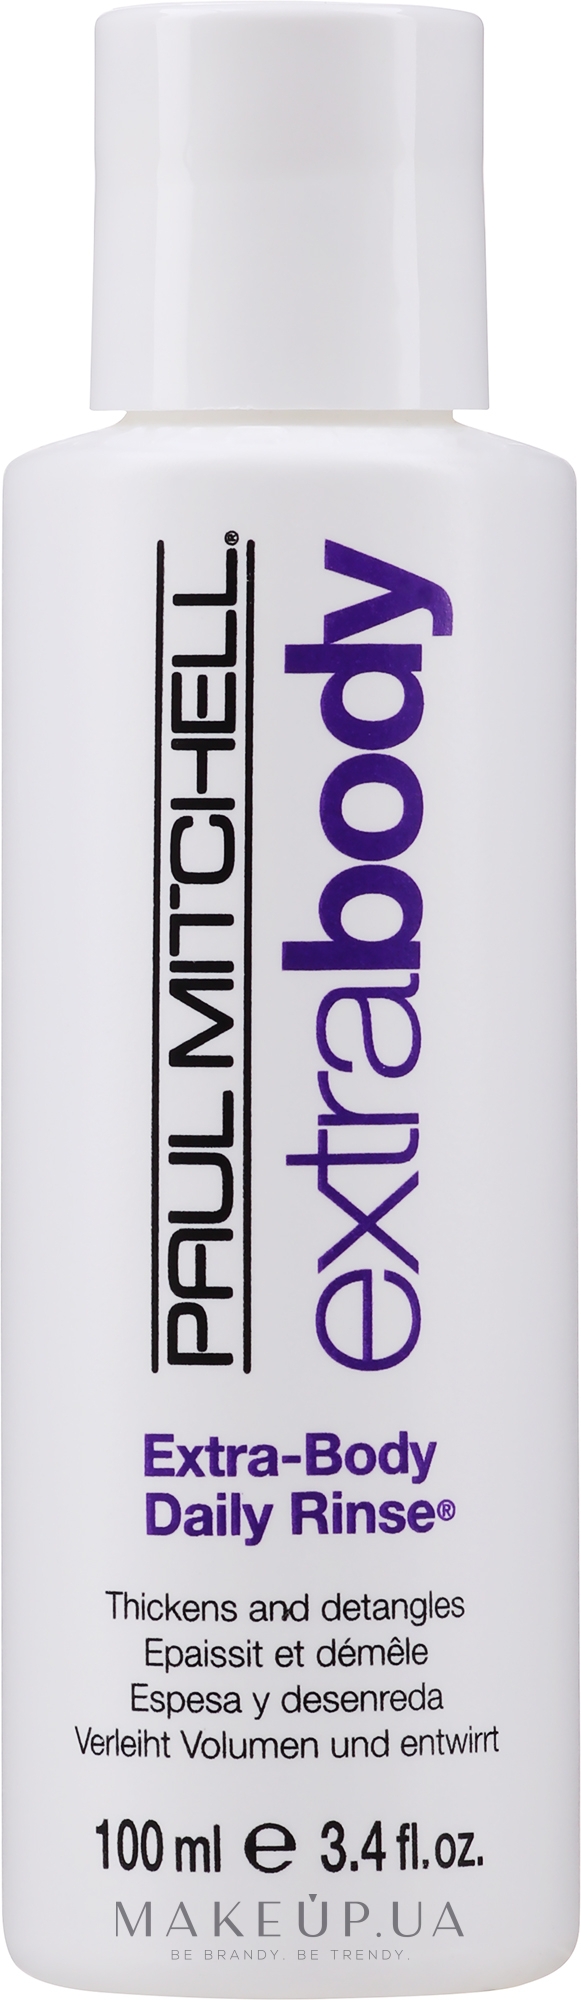 Кондиционер-ополаскиватель для экстраобъема - Paul Mitchell Extra-Body Daily Rinse  — фото 100ml